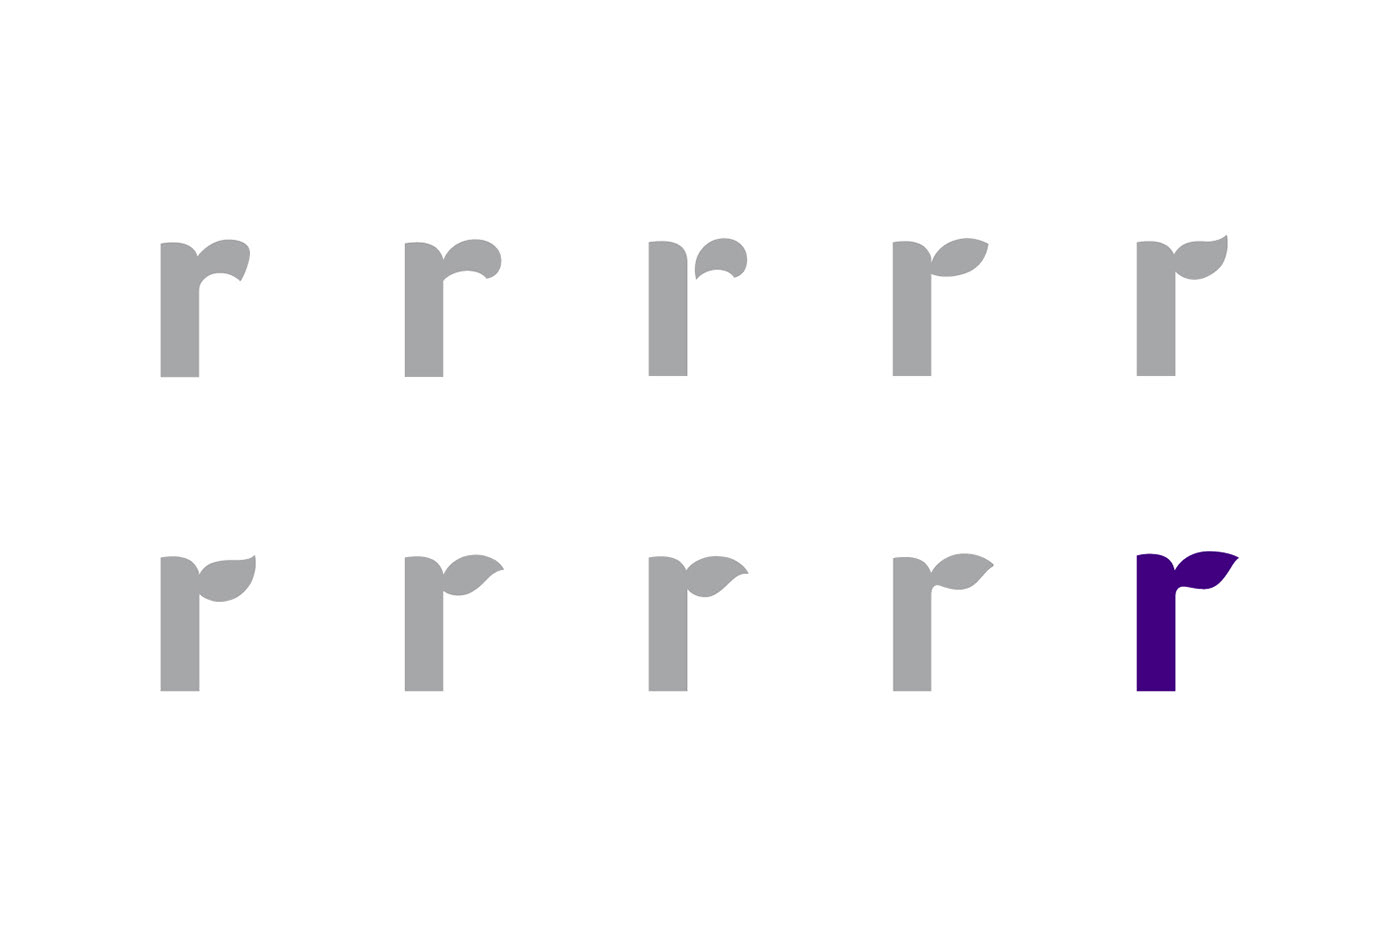 logo branding  identity design typography   Amyris biotech